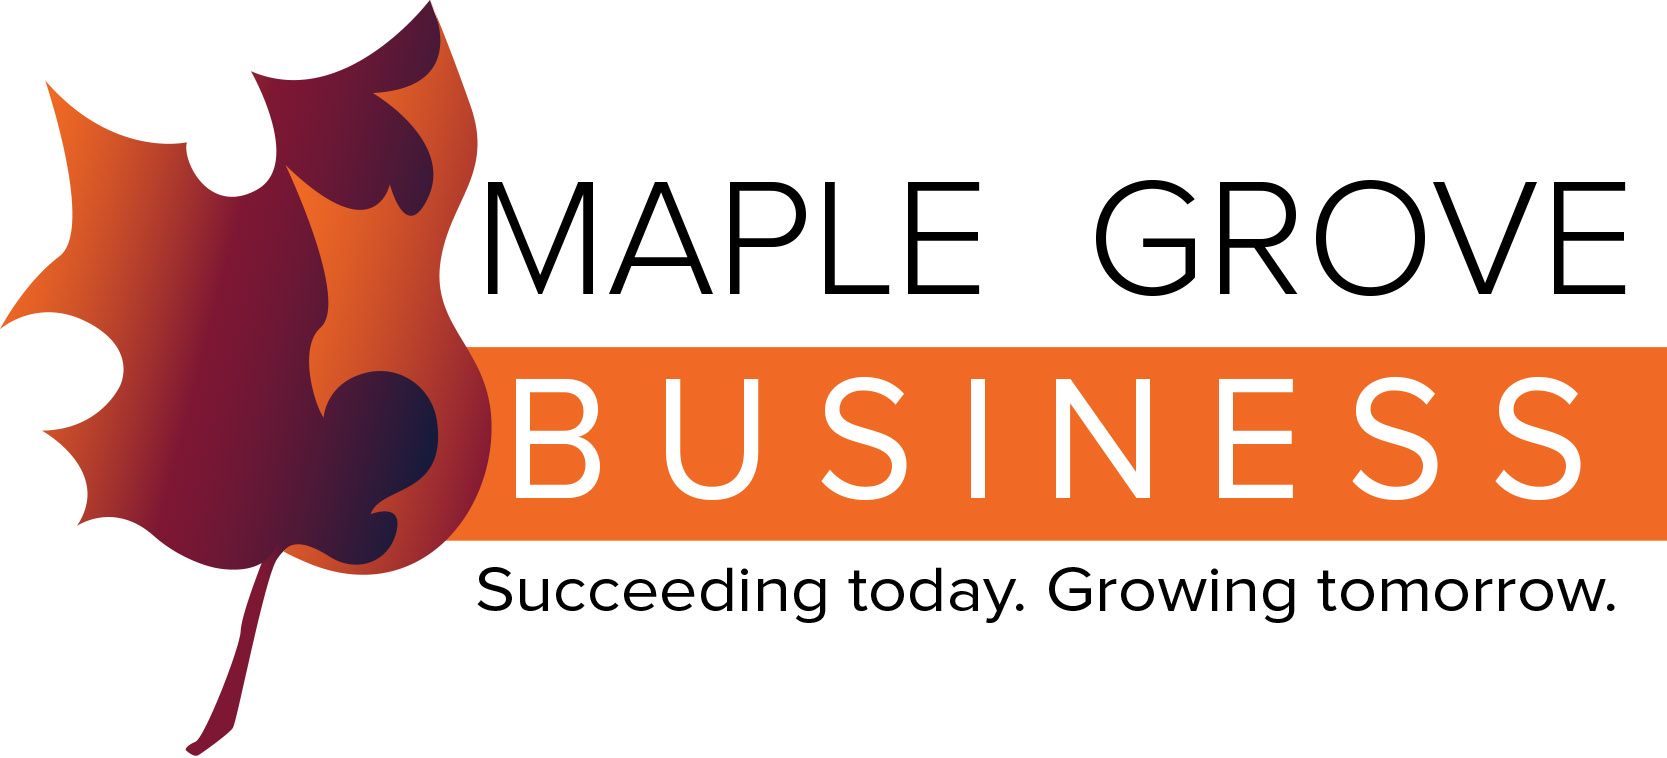 Maple Grove city logo